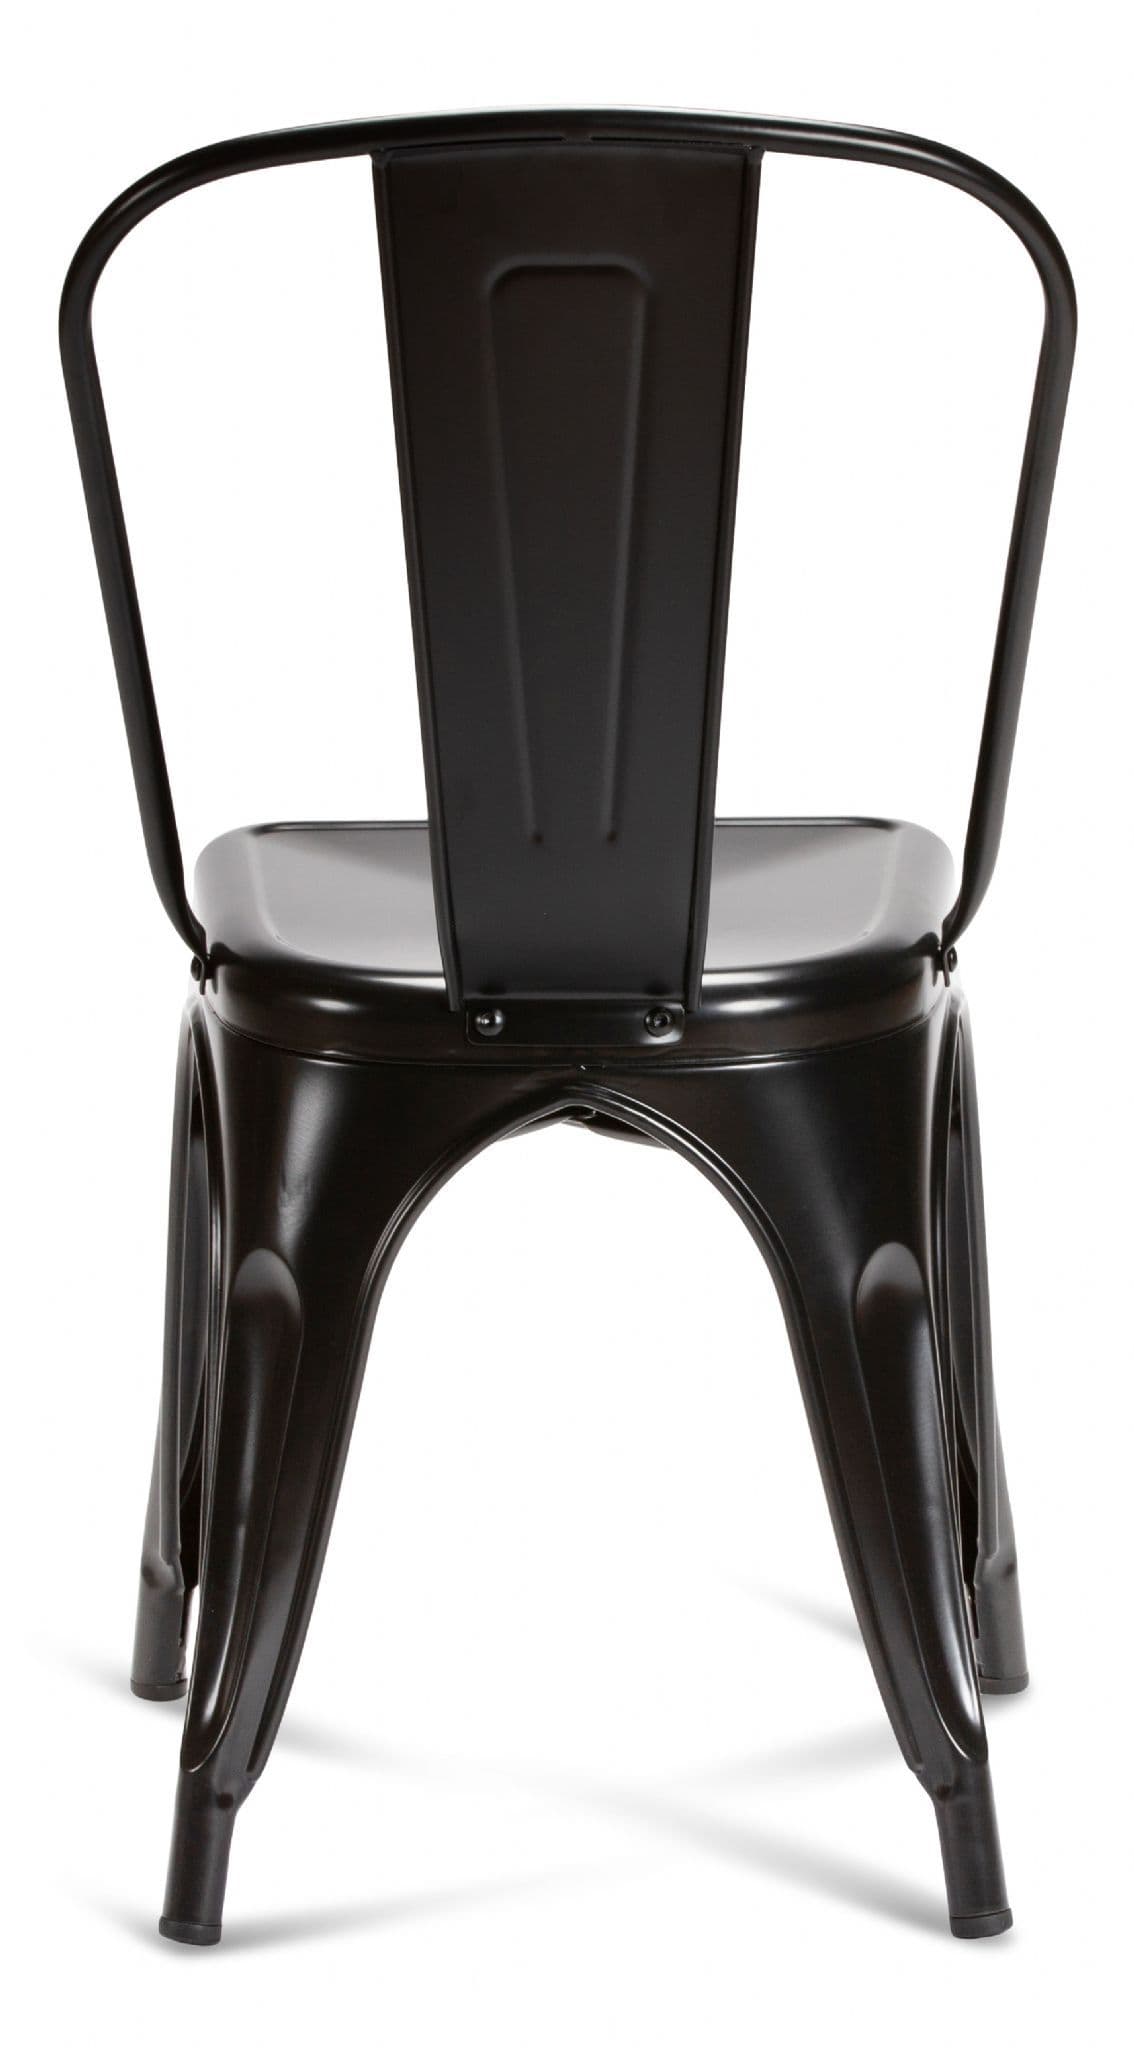 Matt Black Metal Industrial Tolix Style Dining Chairs Rear View